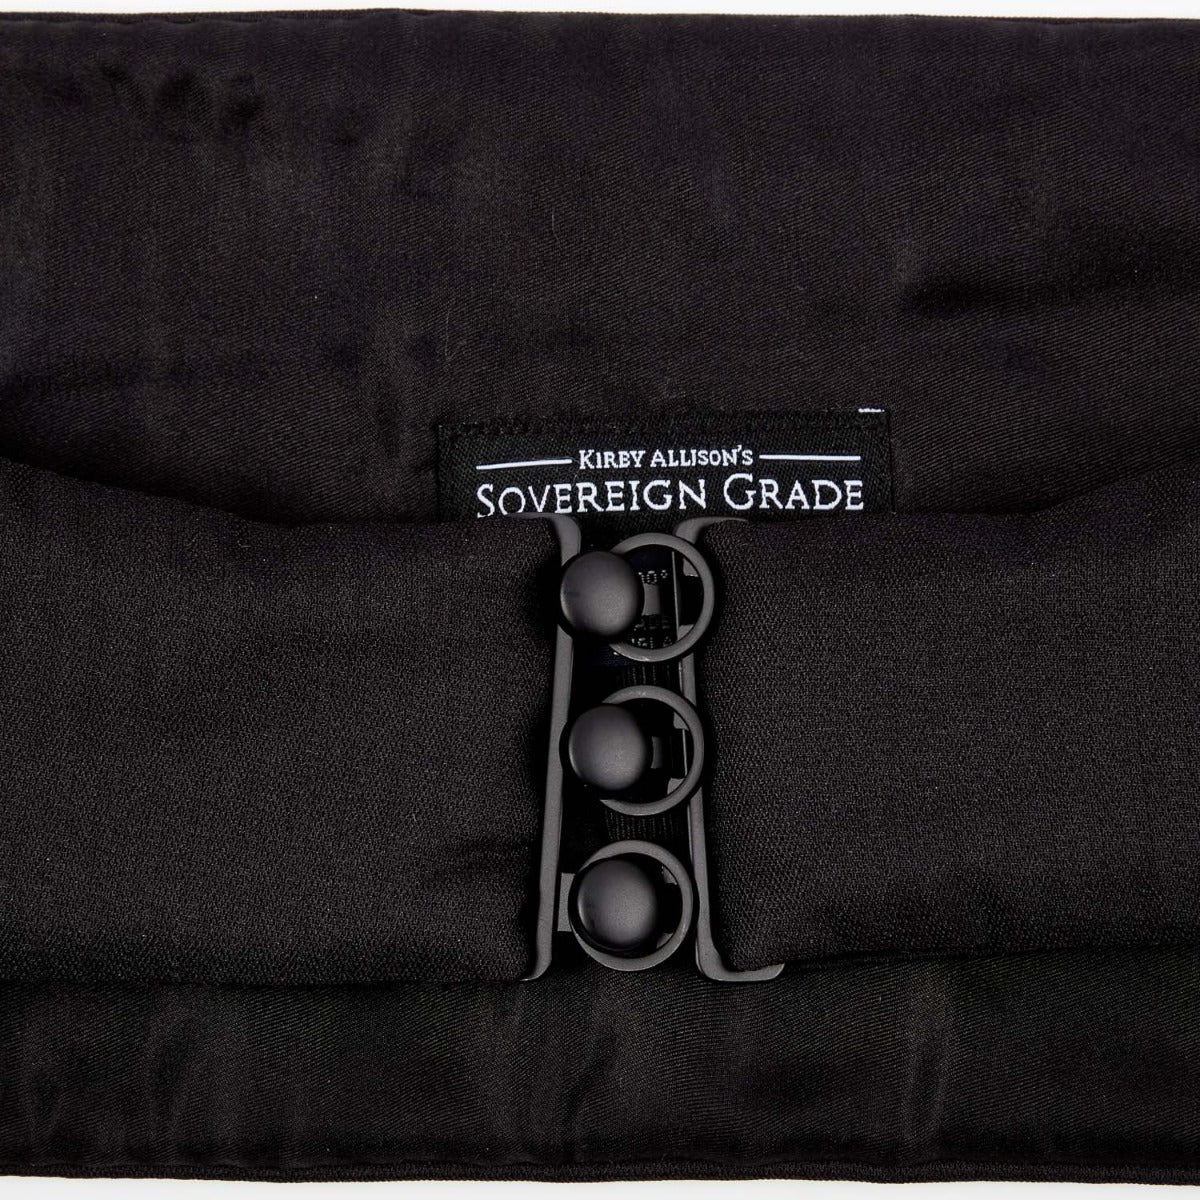 A formalwear accessory with a Sovereign Grade Black Barathea Cummerbund featuring a buckle from KirbyAllison.com.